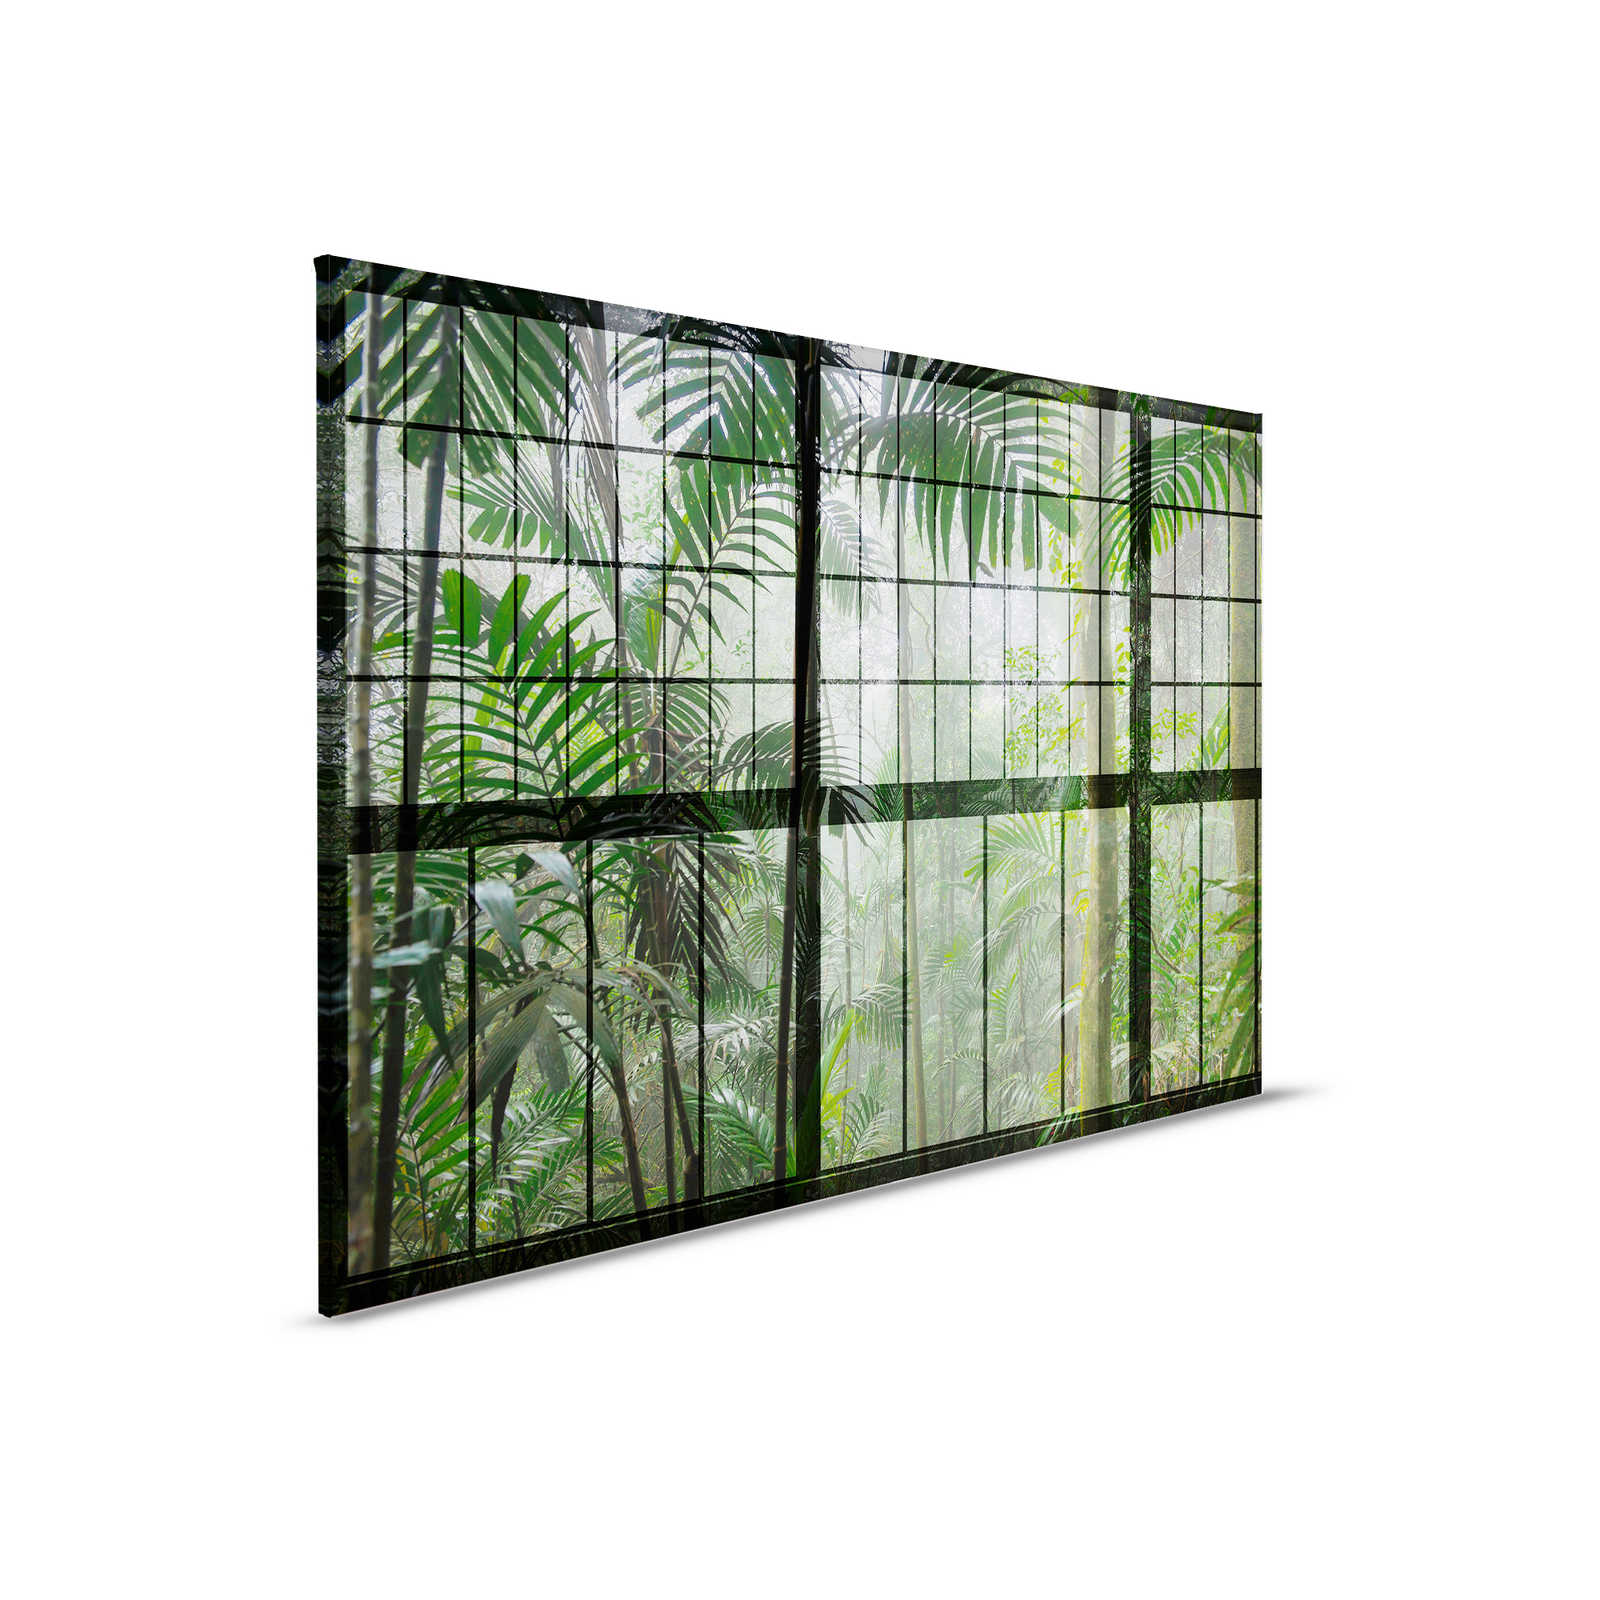         Rainforest 1 - Loftfenster Leinwandbild mit Dschungel Aussicht – 0,90 m x 0,60 m
    